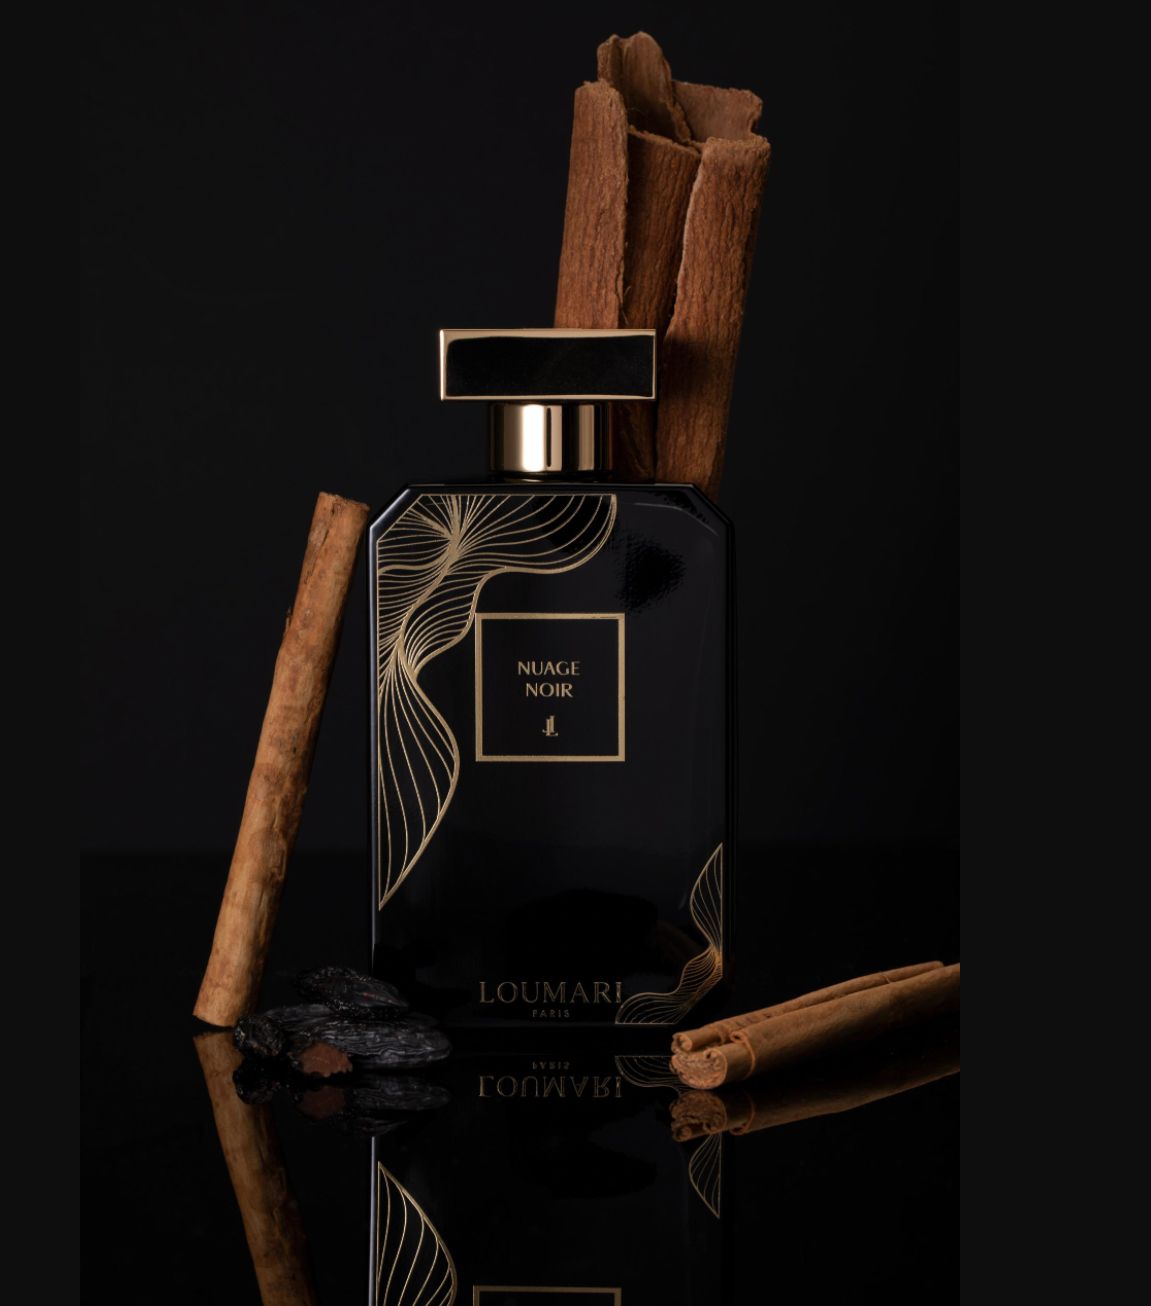 Nuage Noir Loumari perfume - a fragrance for women and men